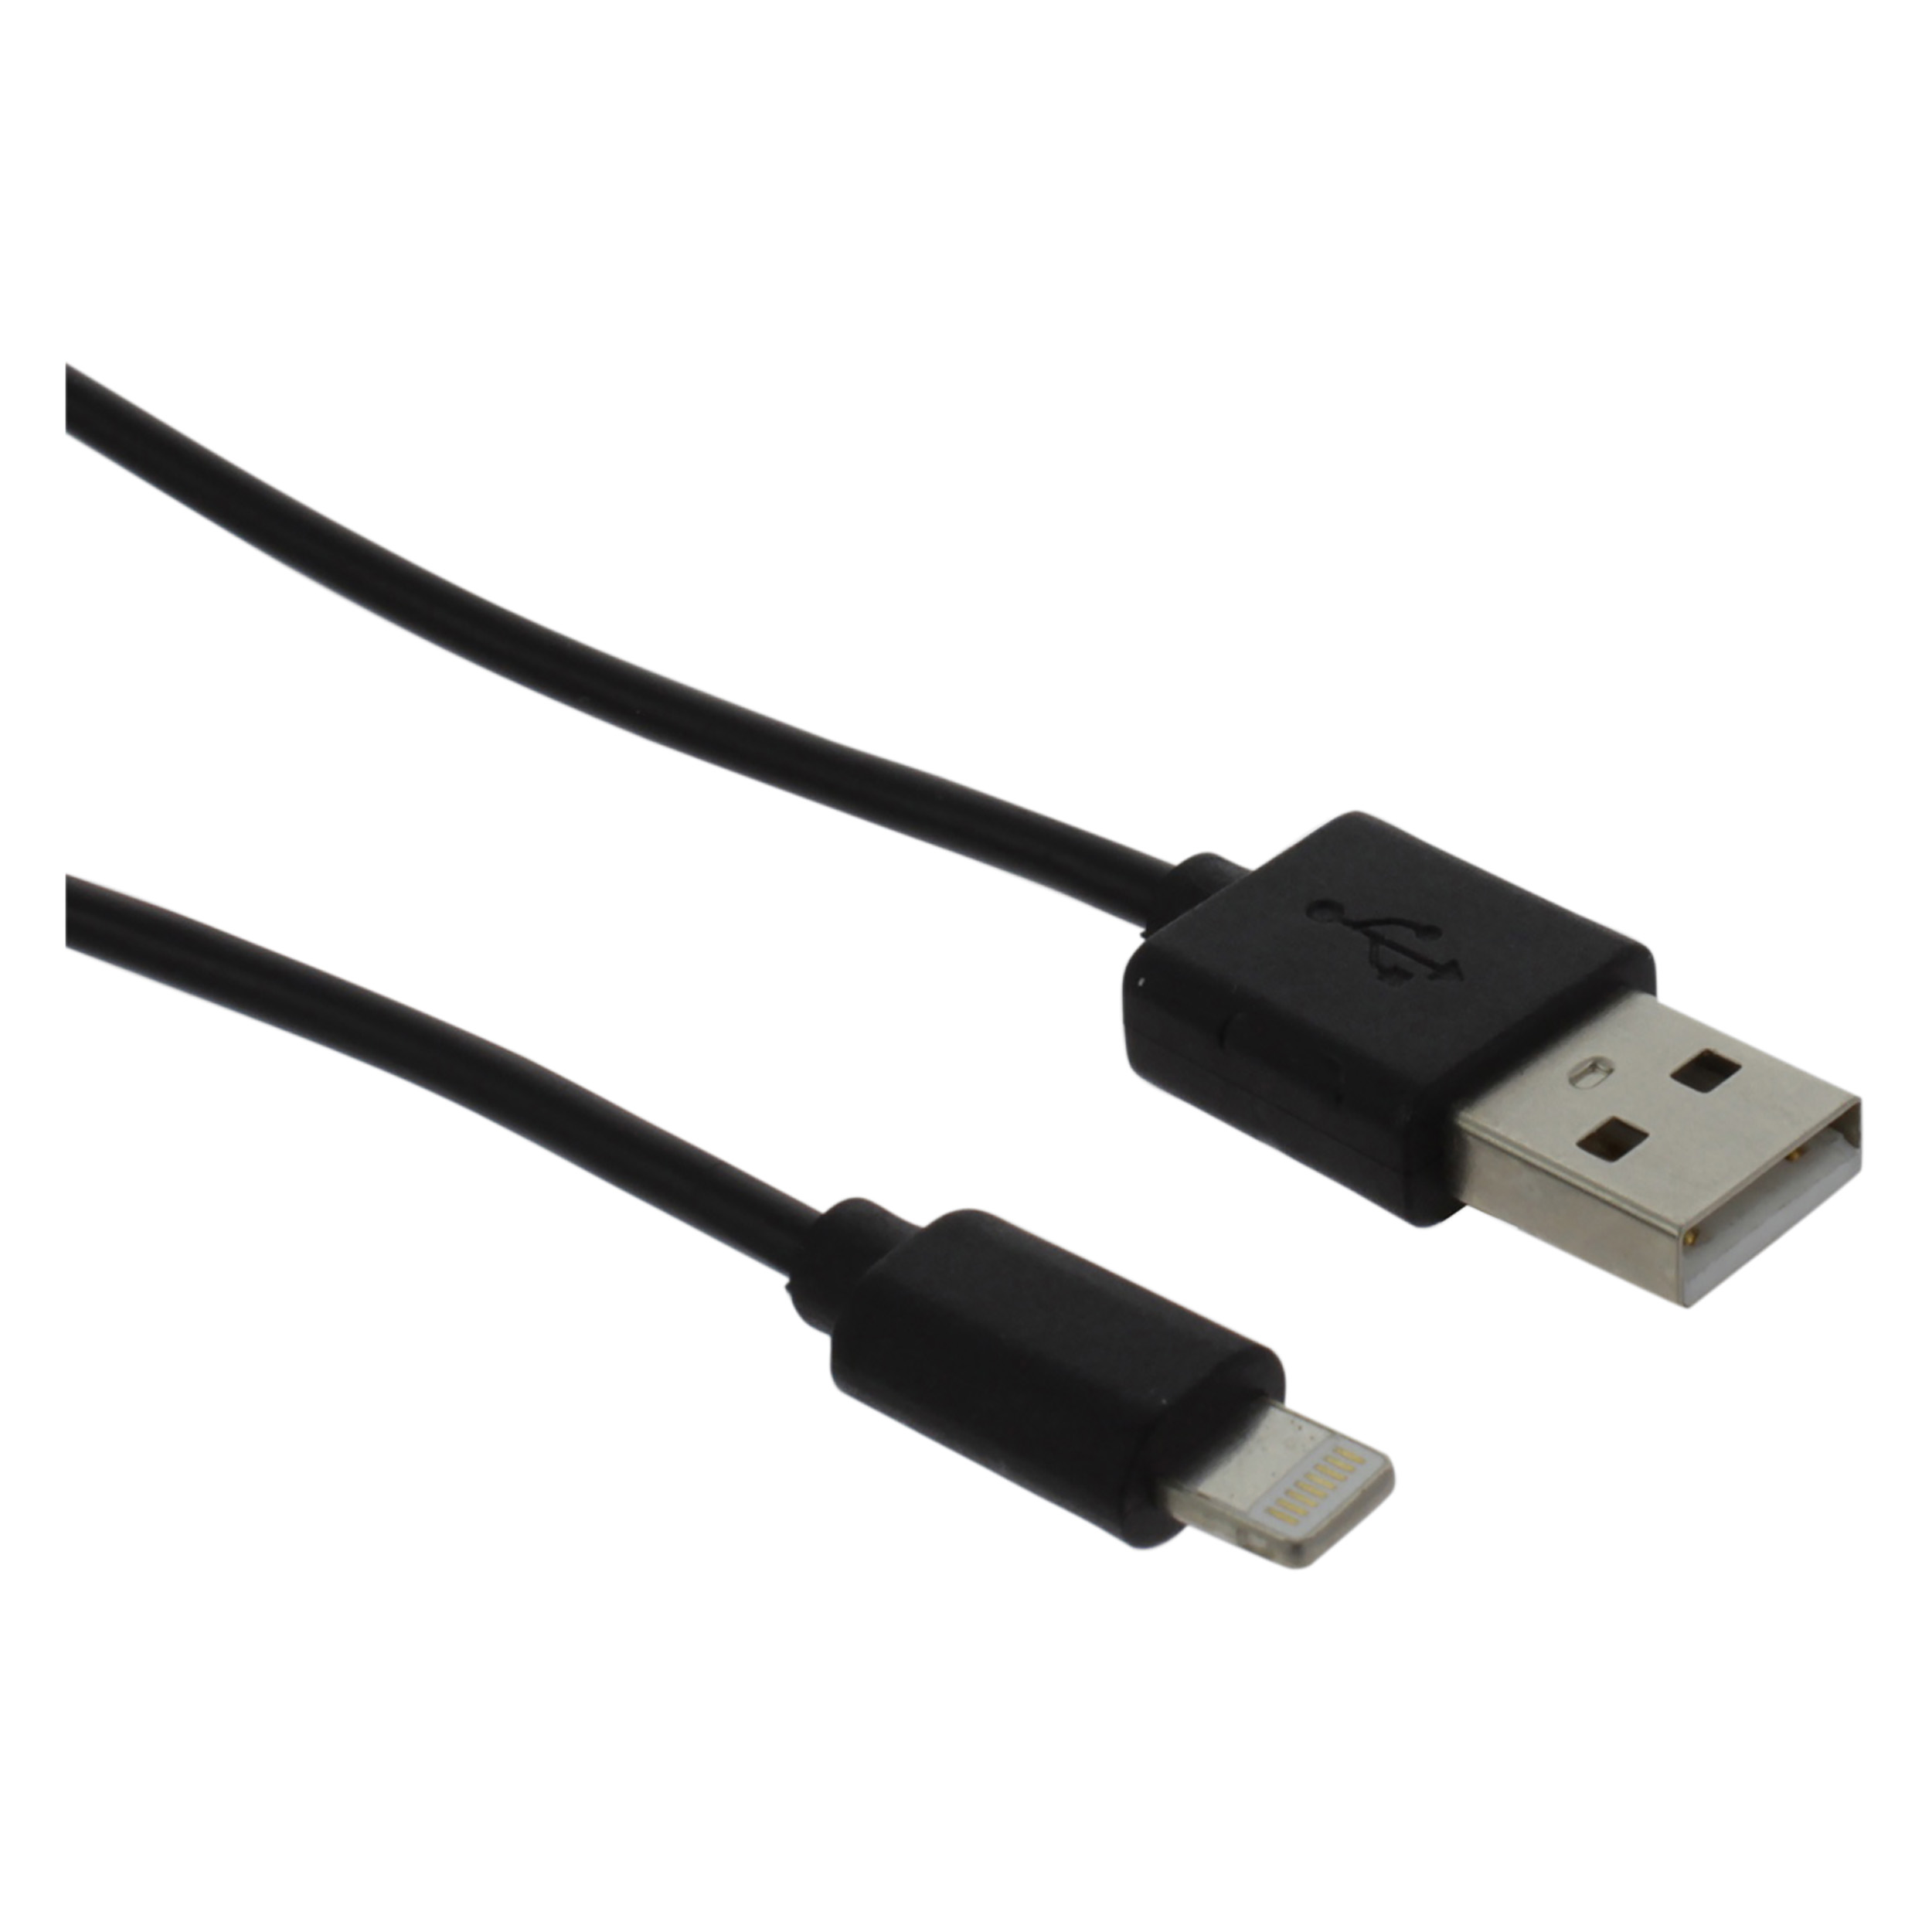 00.134.19 Q-Link  datakabel USB - iPhone - enkel - 1.5 m - zwart